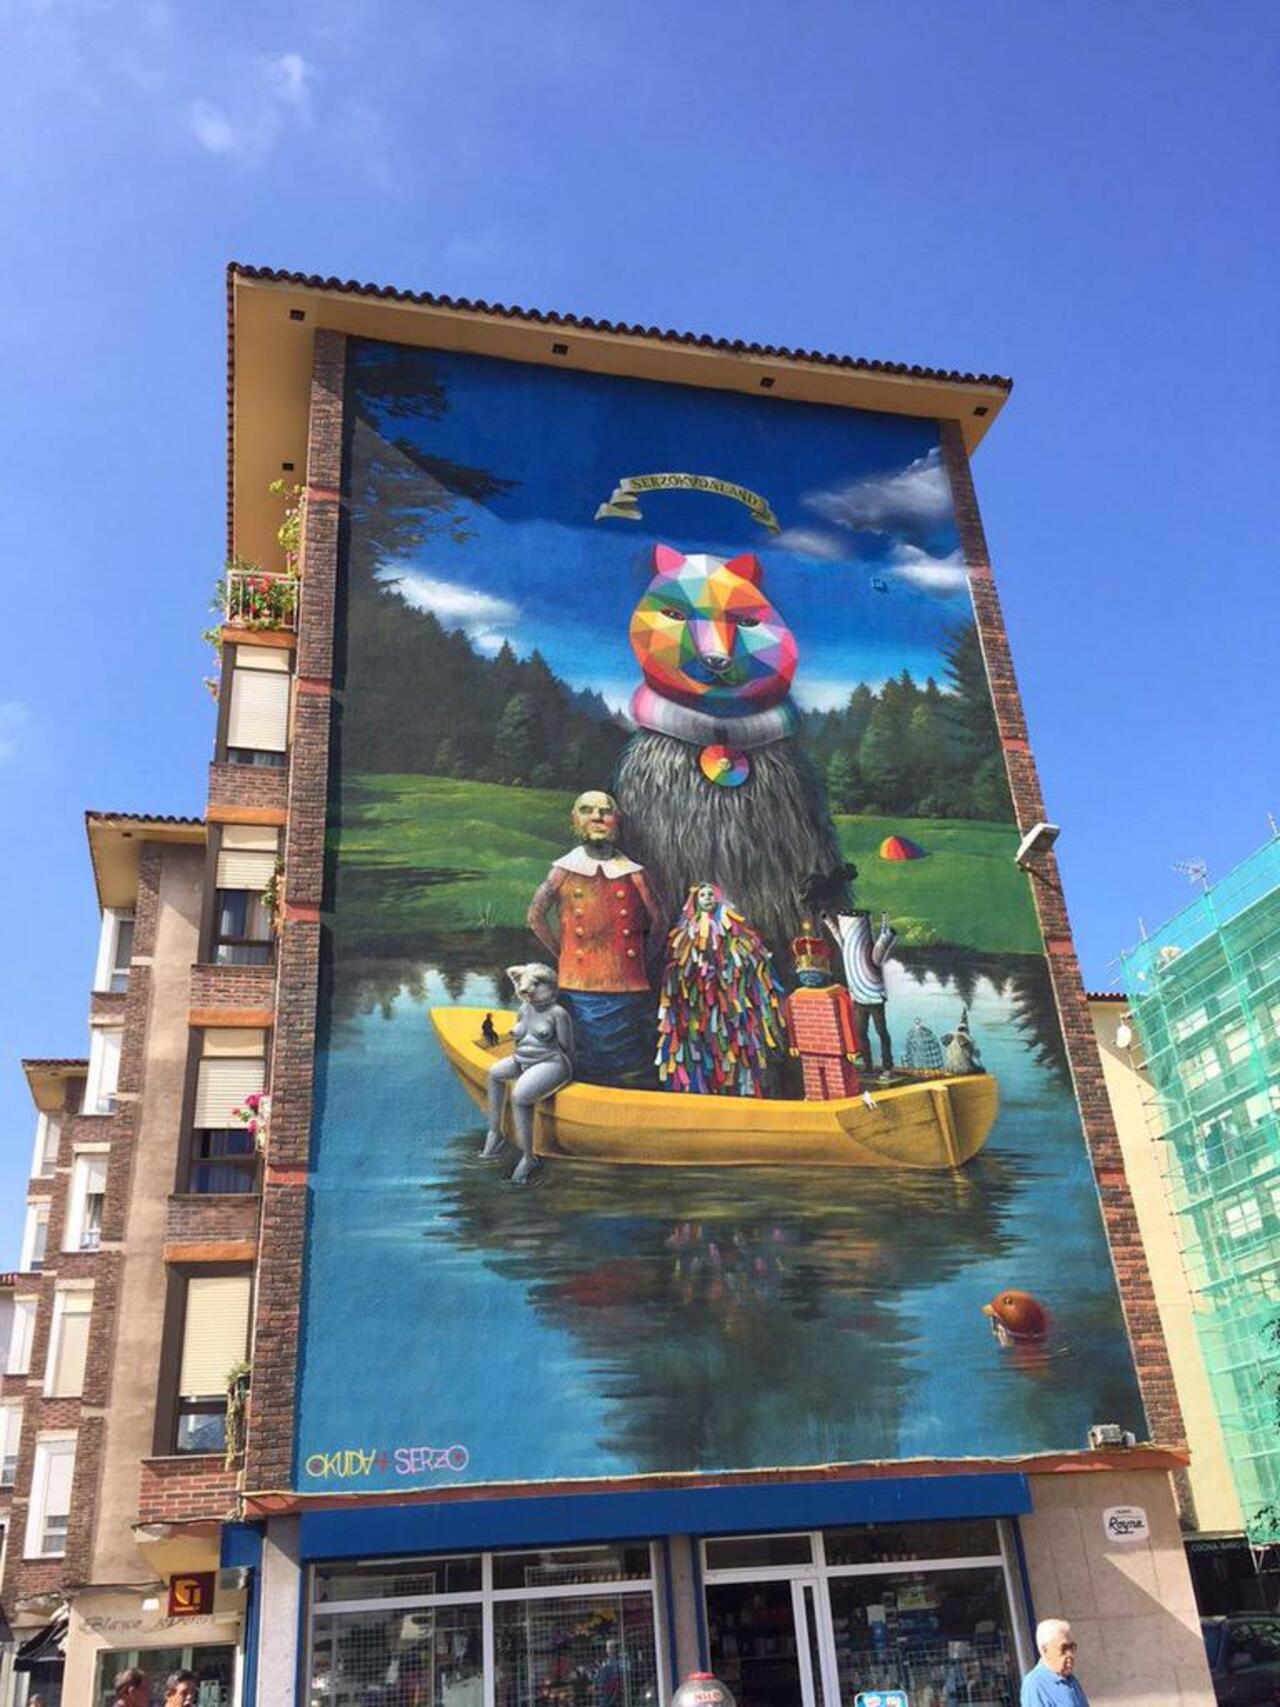 RT @richardbanfa: #Okuda & #Serzo #switch a wall into a #mural in #Santander, #Spain #streetart #switch #graffiti #bedifferent #arte http://t.co/vzvKmgeTAs